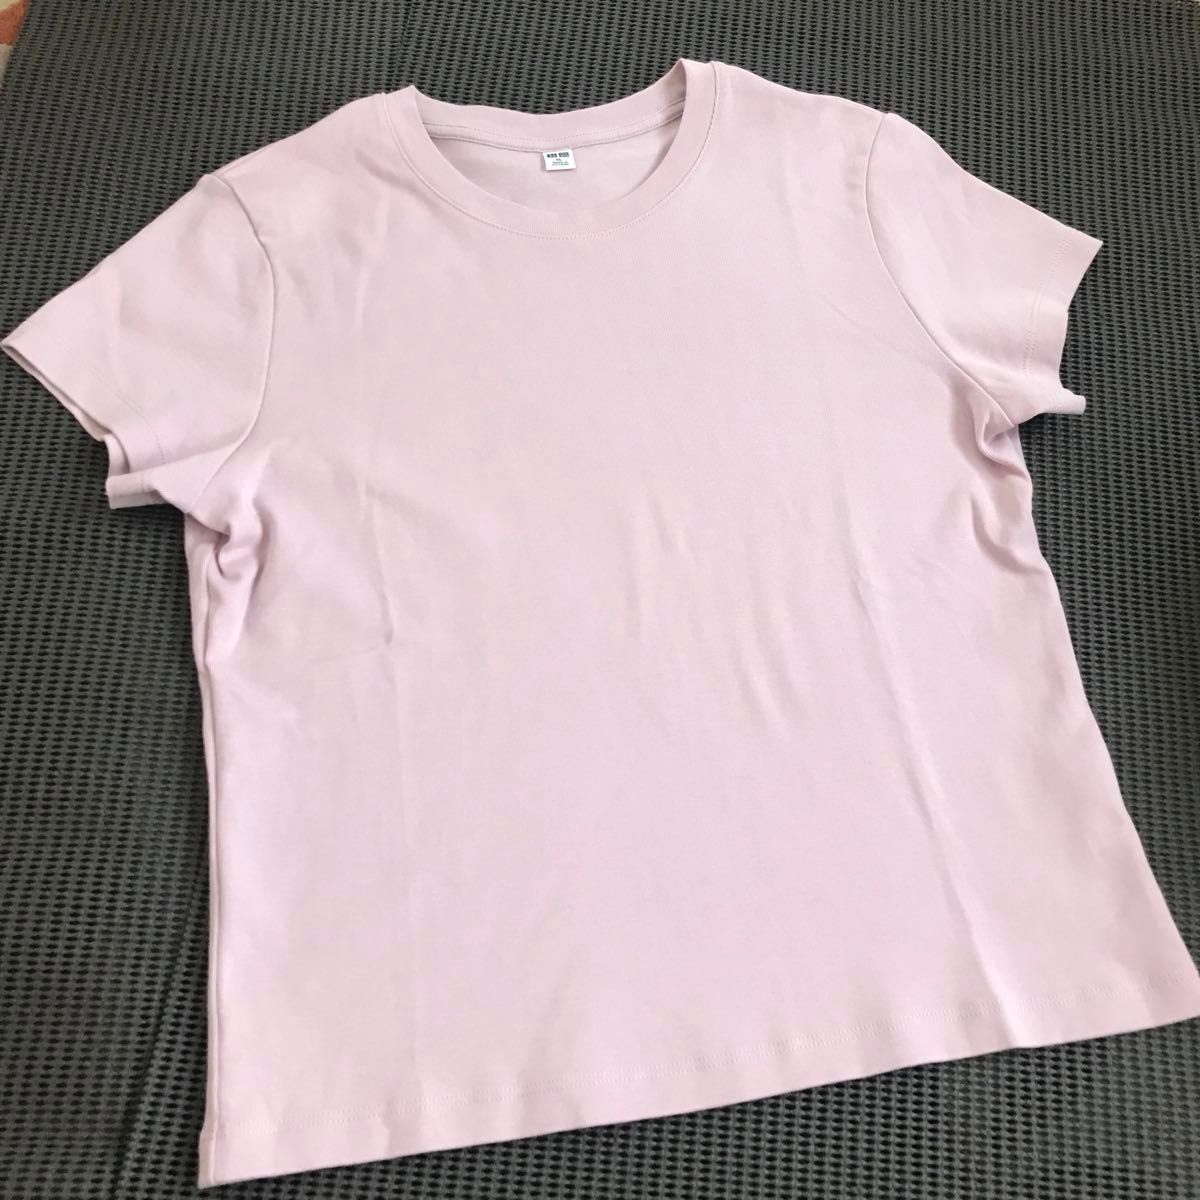 UNIQLO ユニクロ カットソー  Tシャツ ミニT ピンク  半袖 クルーネック XL 無地  ※クーポン使用で¥590